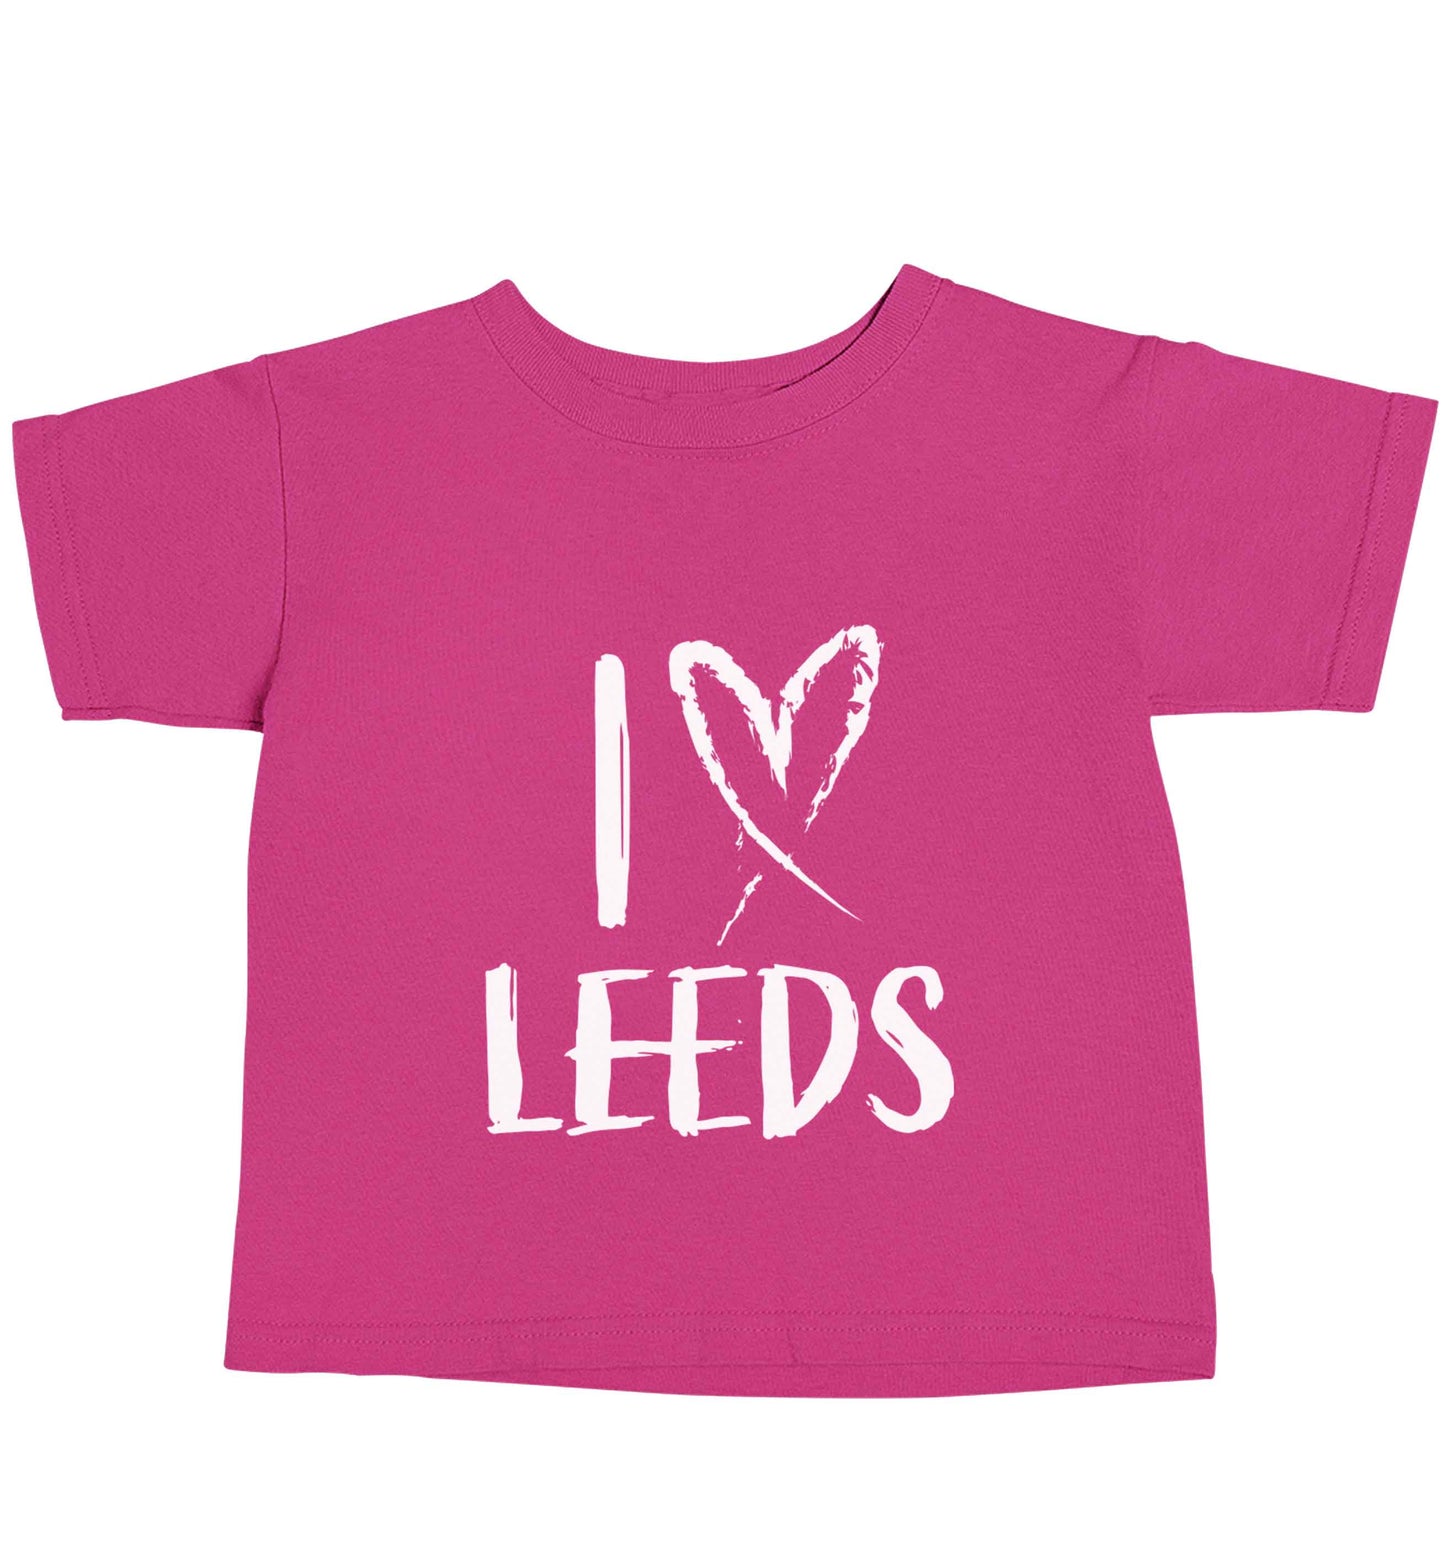 I love Leeds pink baby toddler Tshirt 2 Years